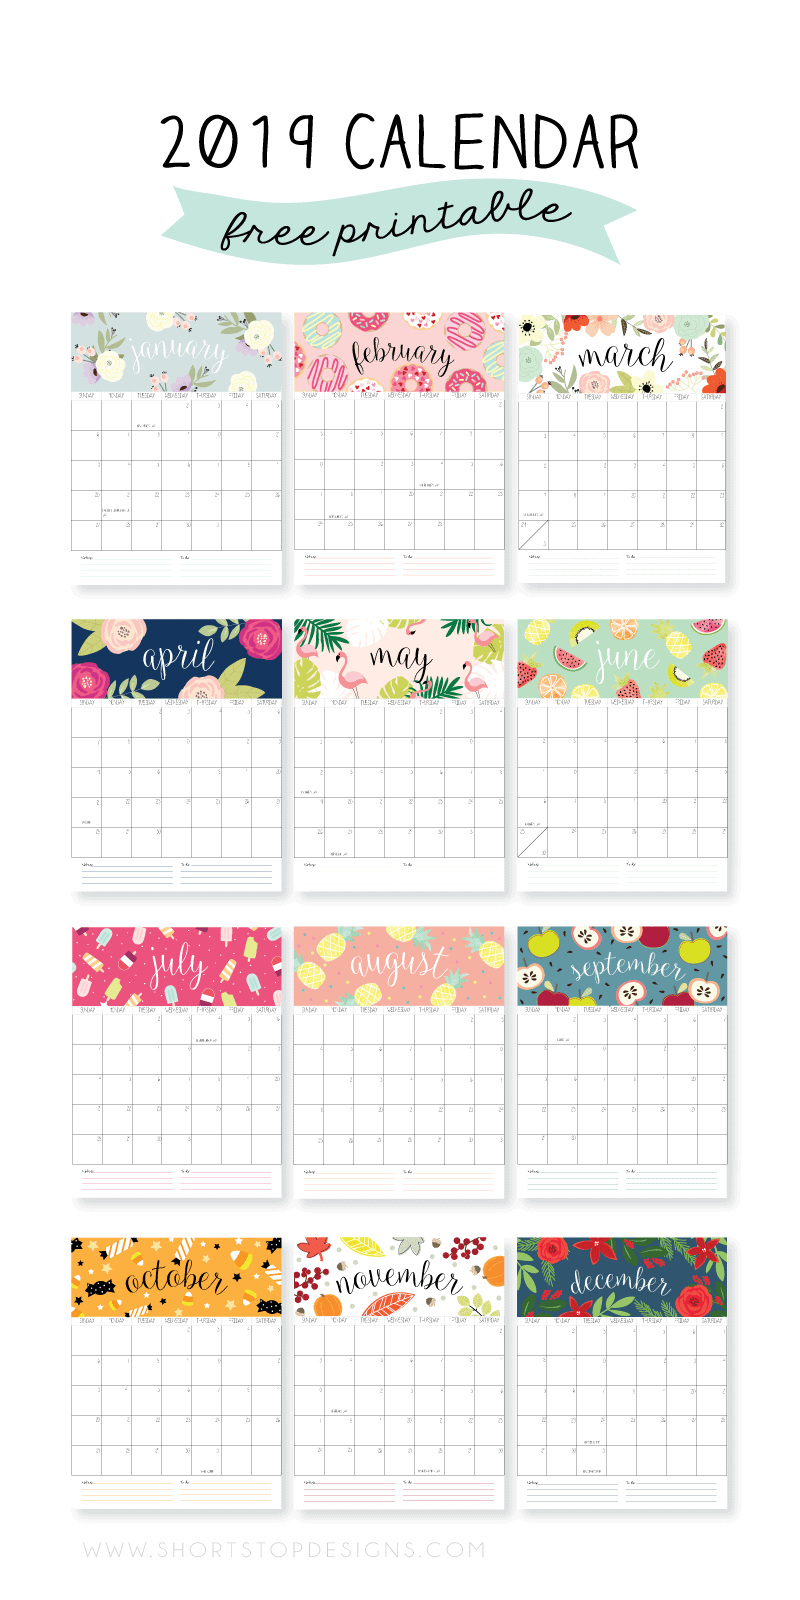 2019 Printable Calendar short stop designs